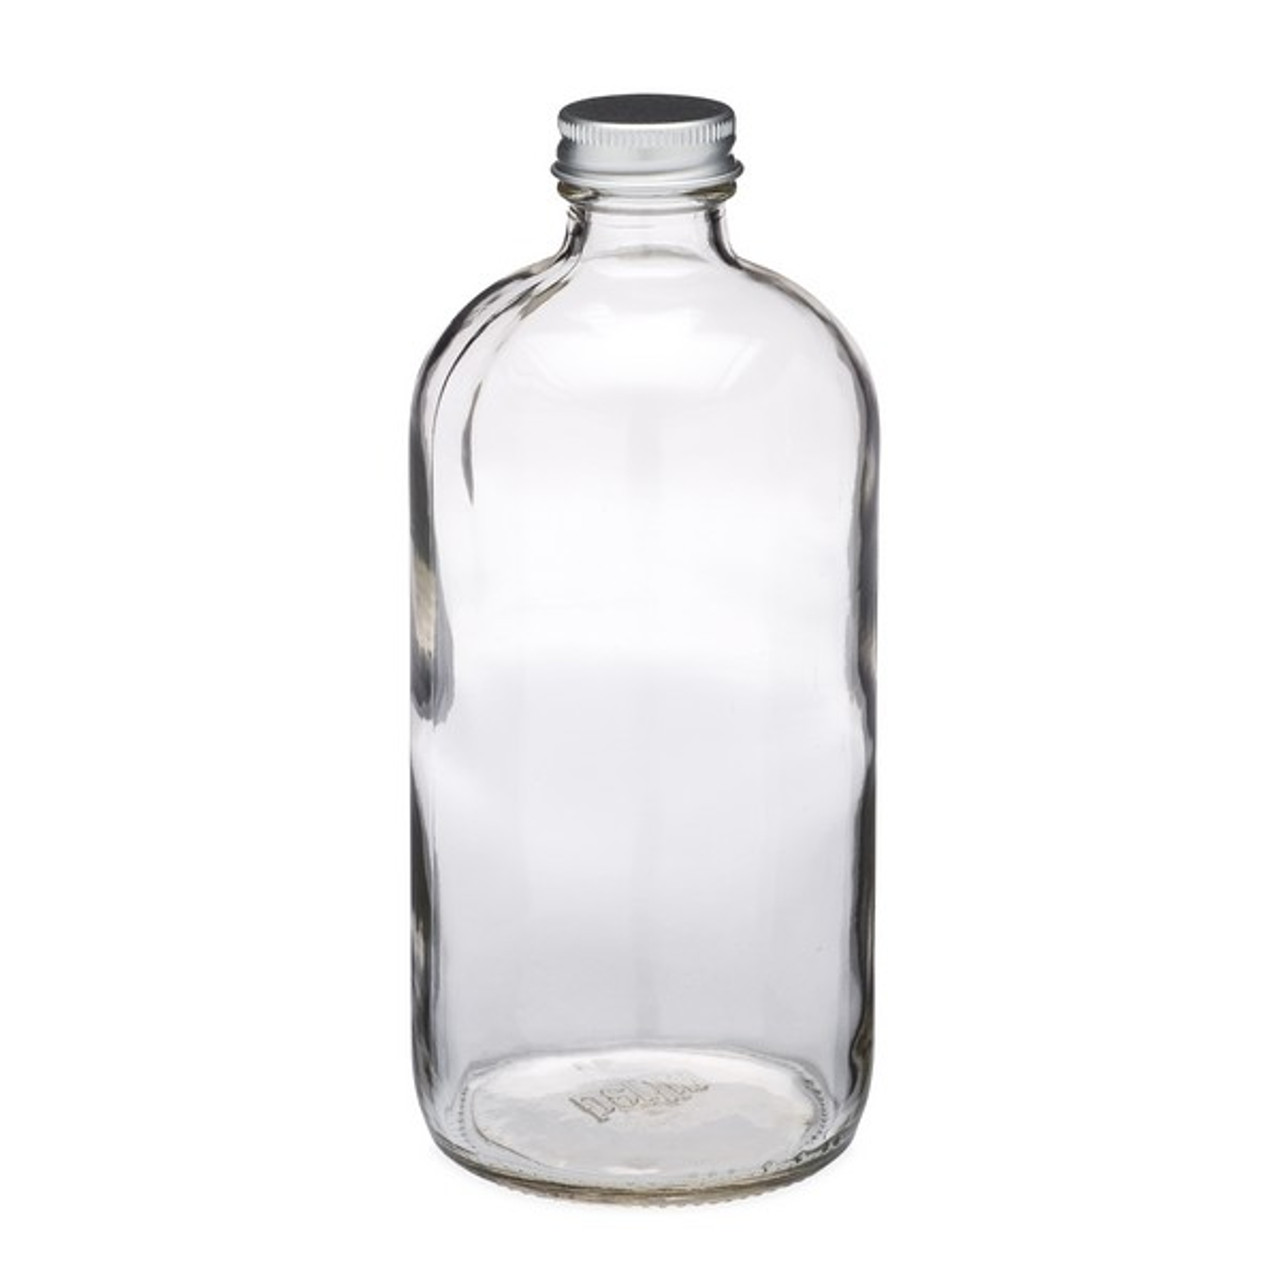 16 oz Glass Bottle